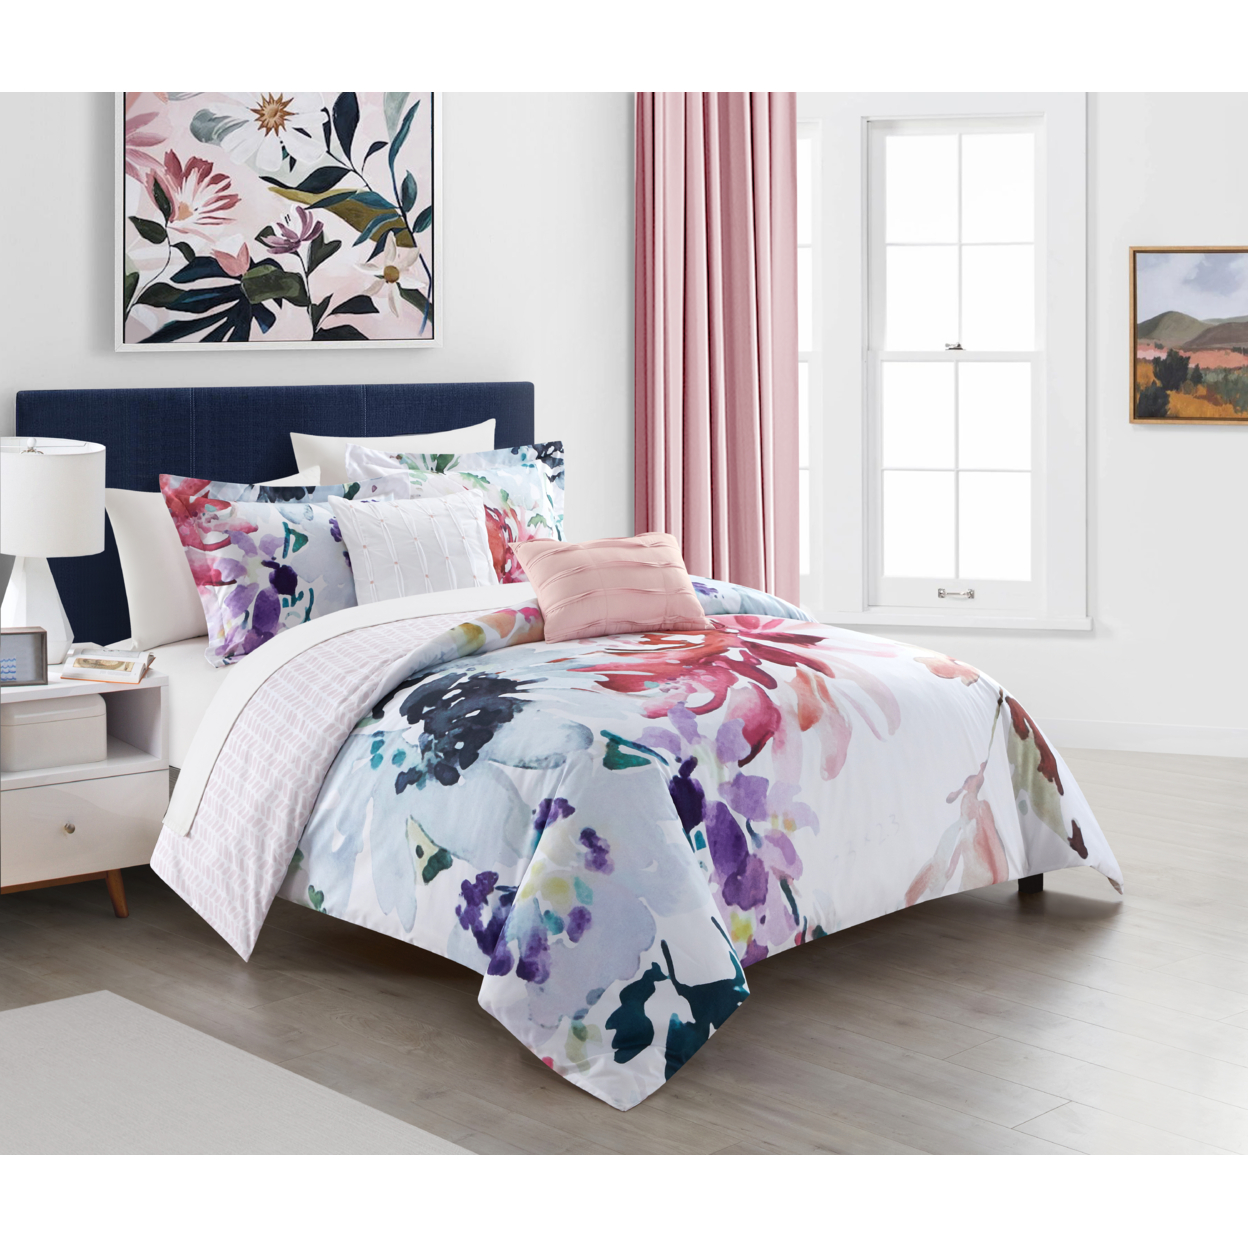 Victoria 5 Piece Reversible Comforter Set Floral Watercolor Design Bedding - Waldo Red, Twin